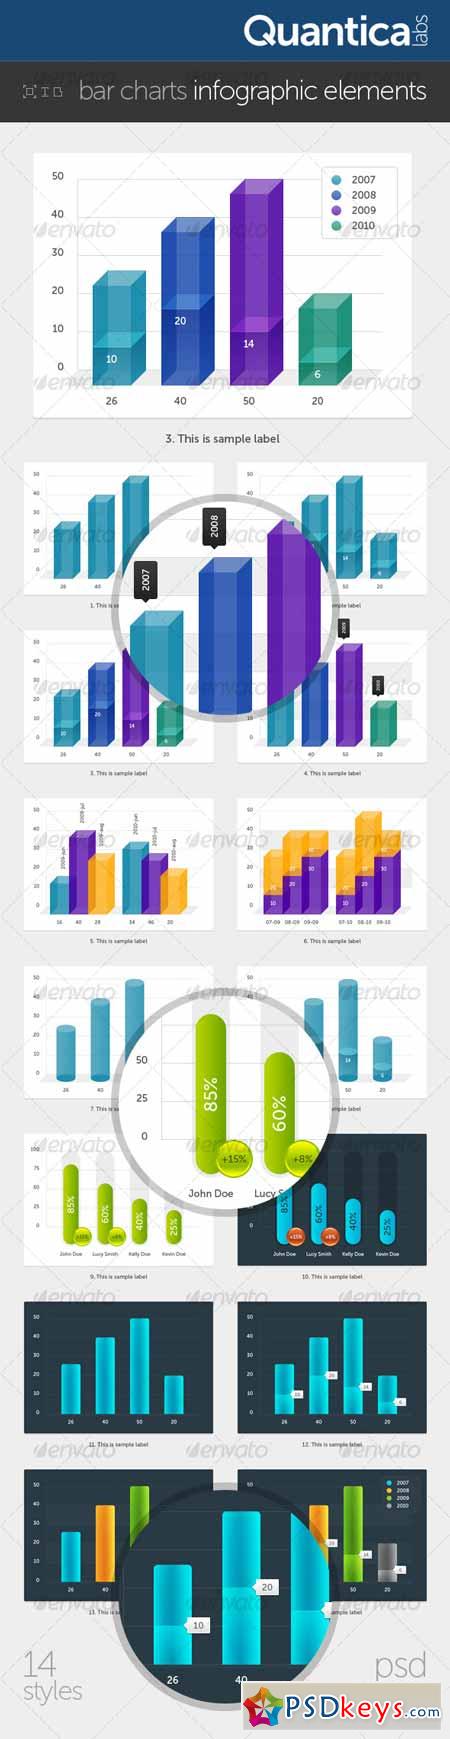 Bar Charts Infographic Elements 131151